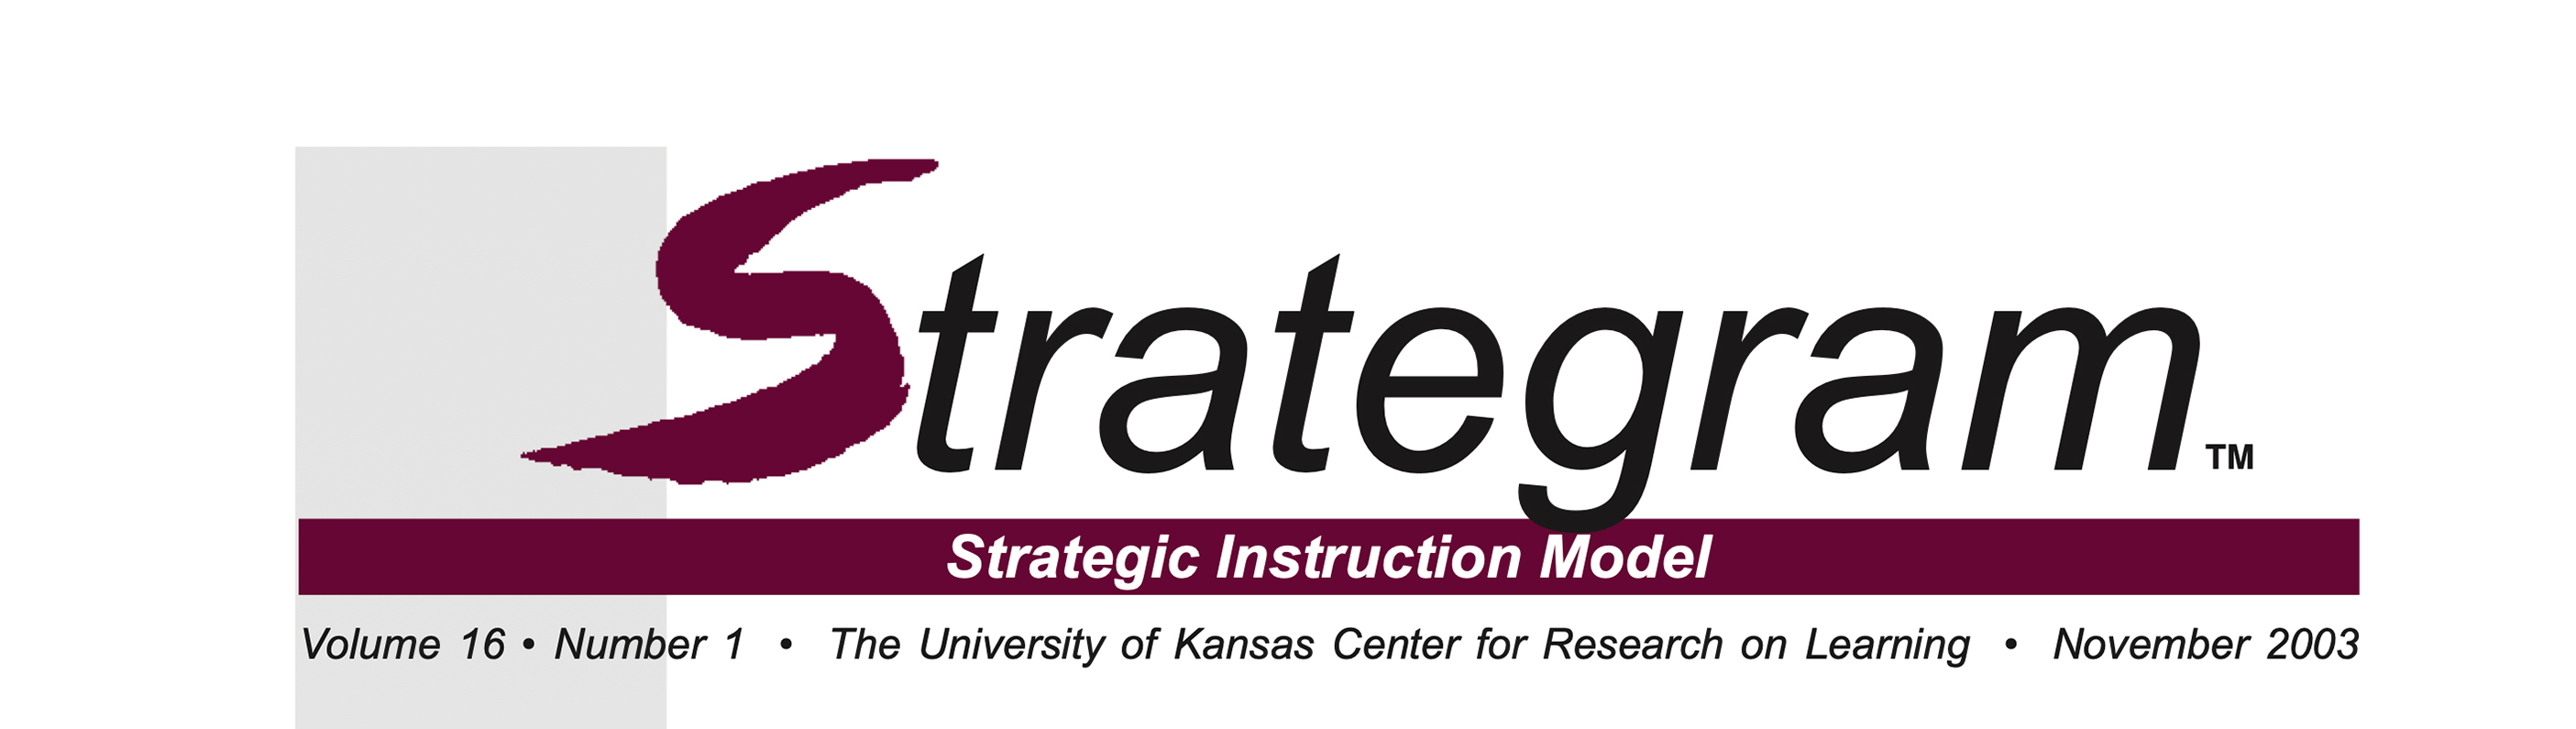 Strategram logo